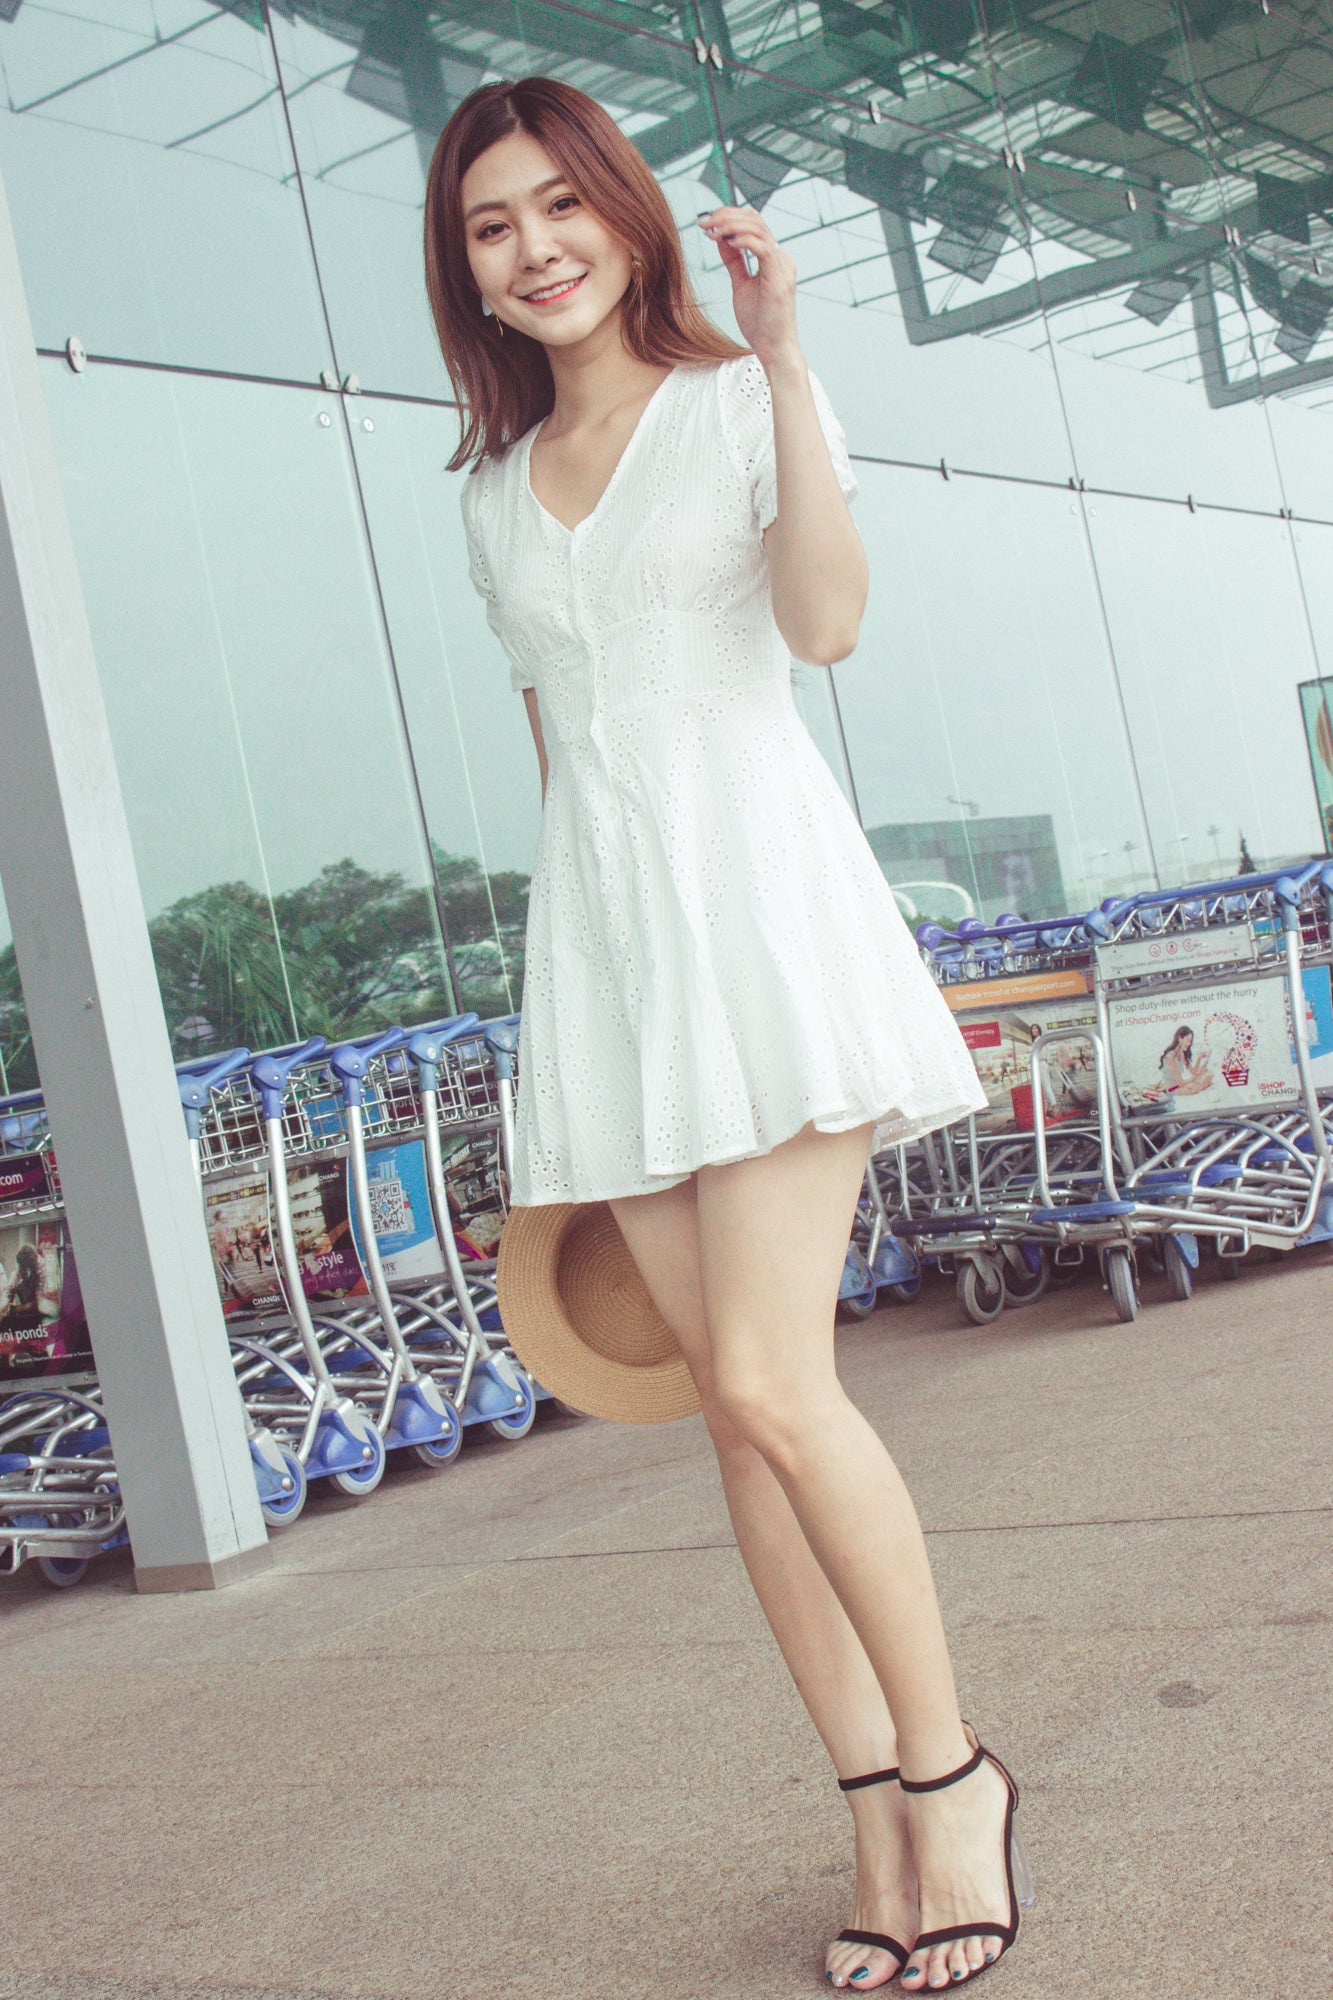 Voralle Crochet Dress in White